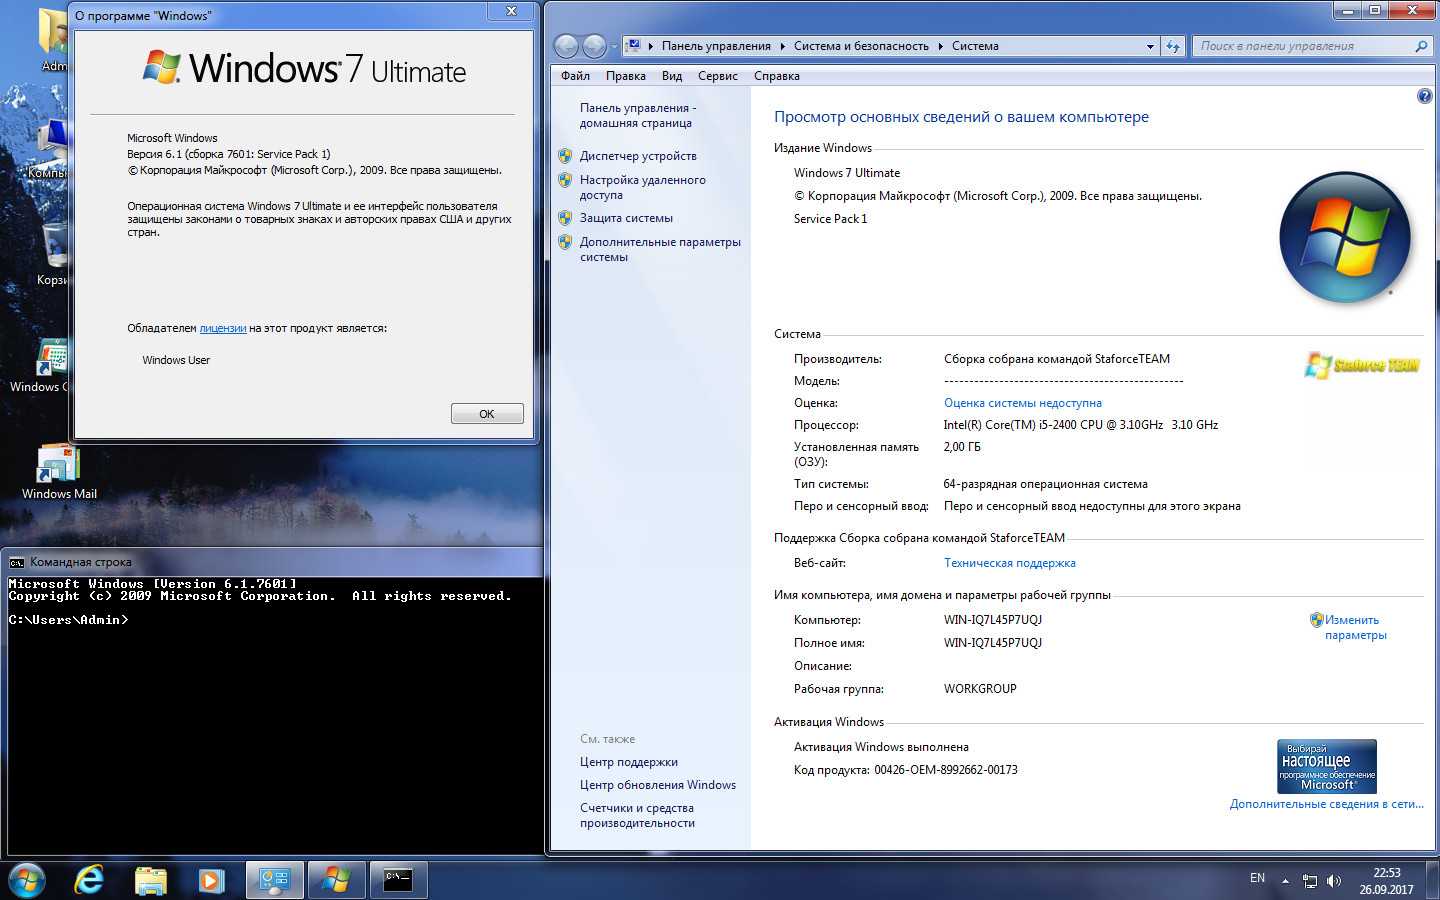 Microsoft windows 7 sp1 changes